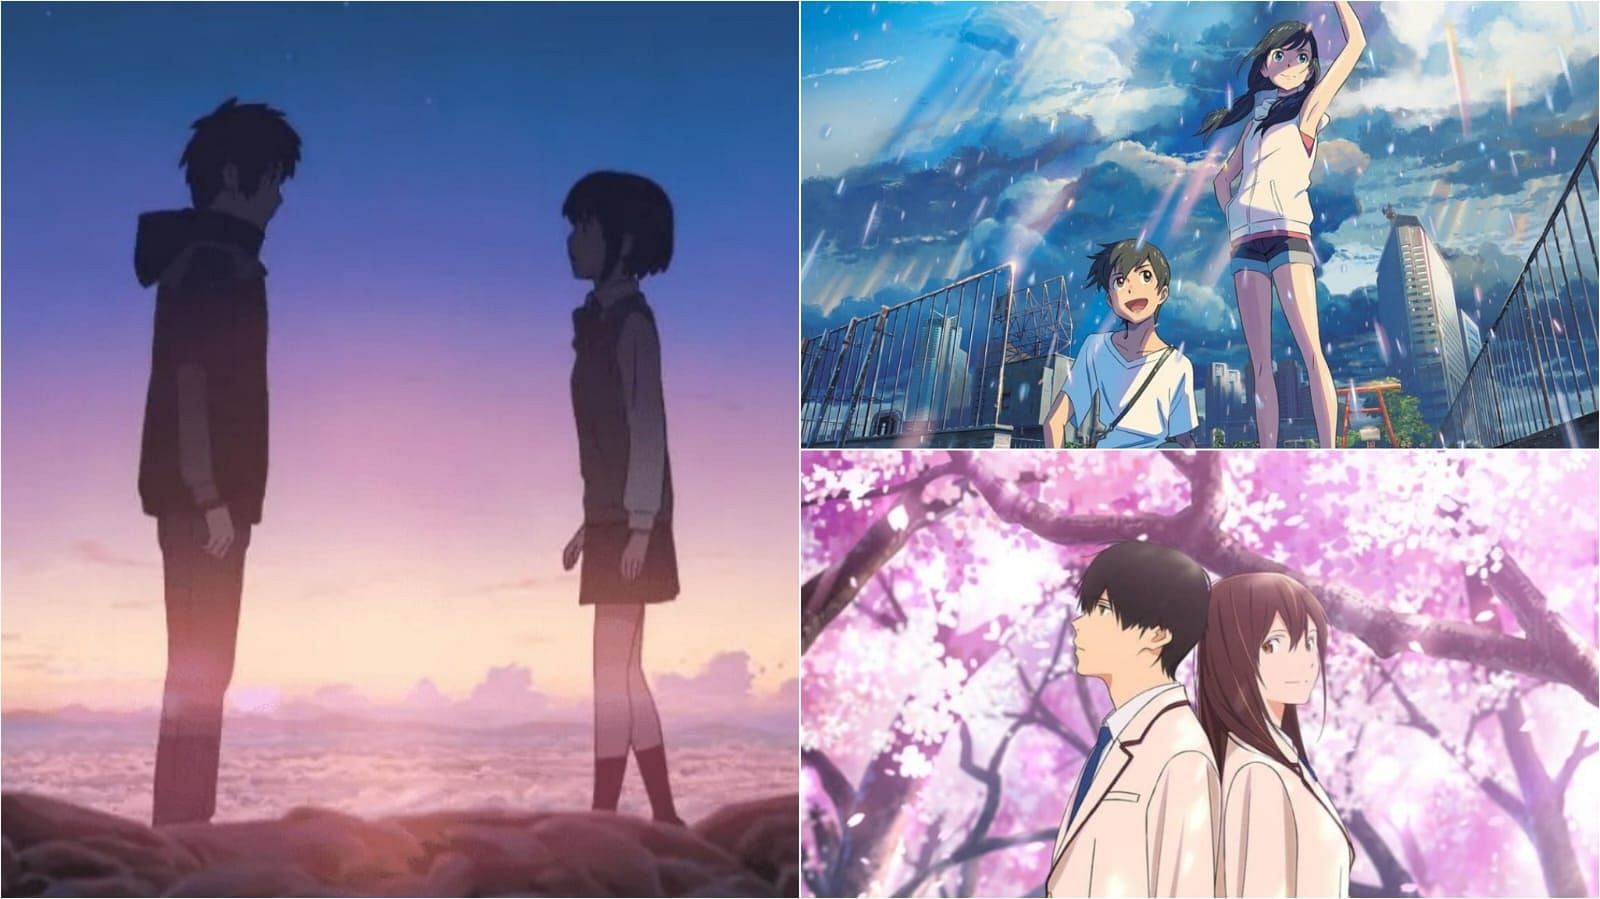 High school romance anime to watch if you Like Horimiya - MyLifeThroughAnime